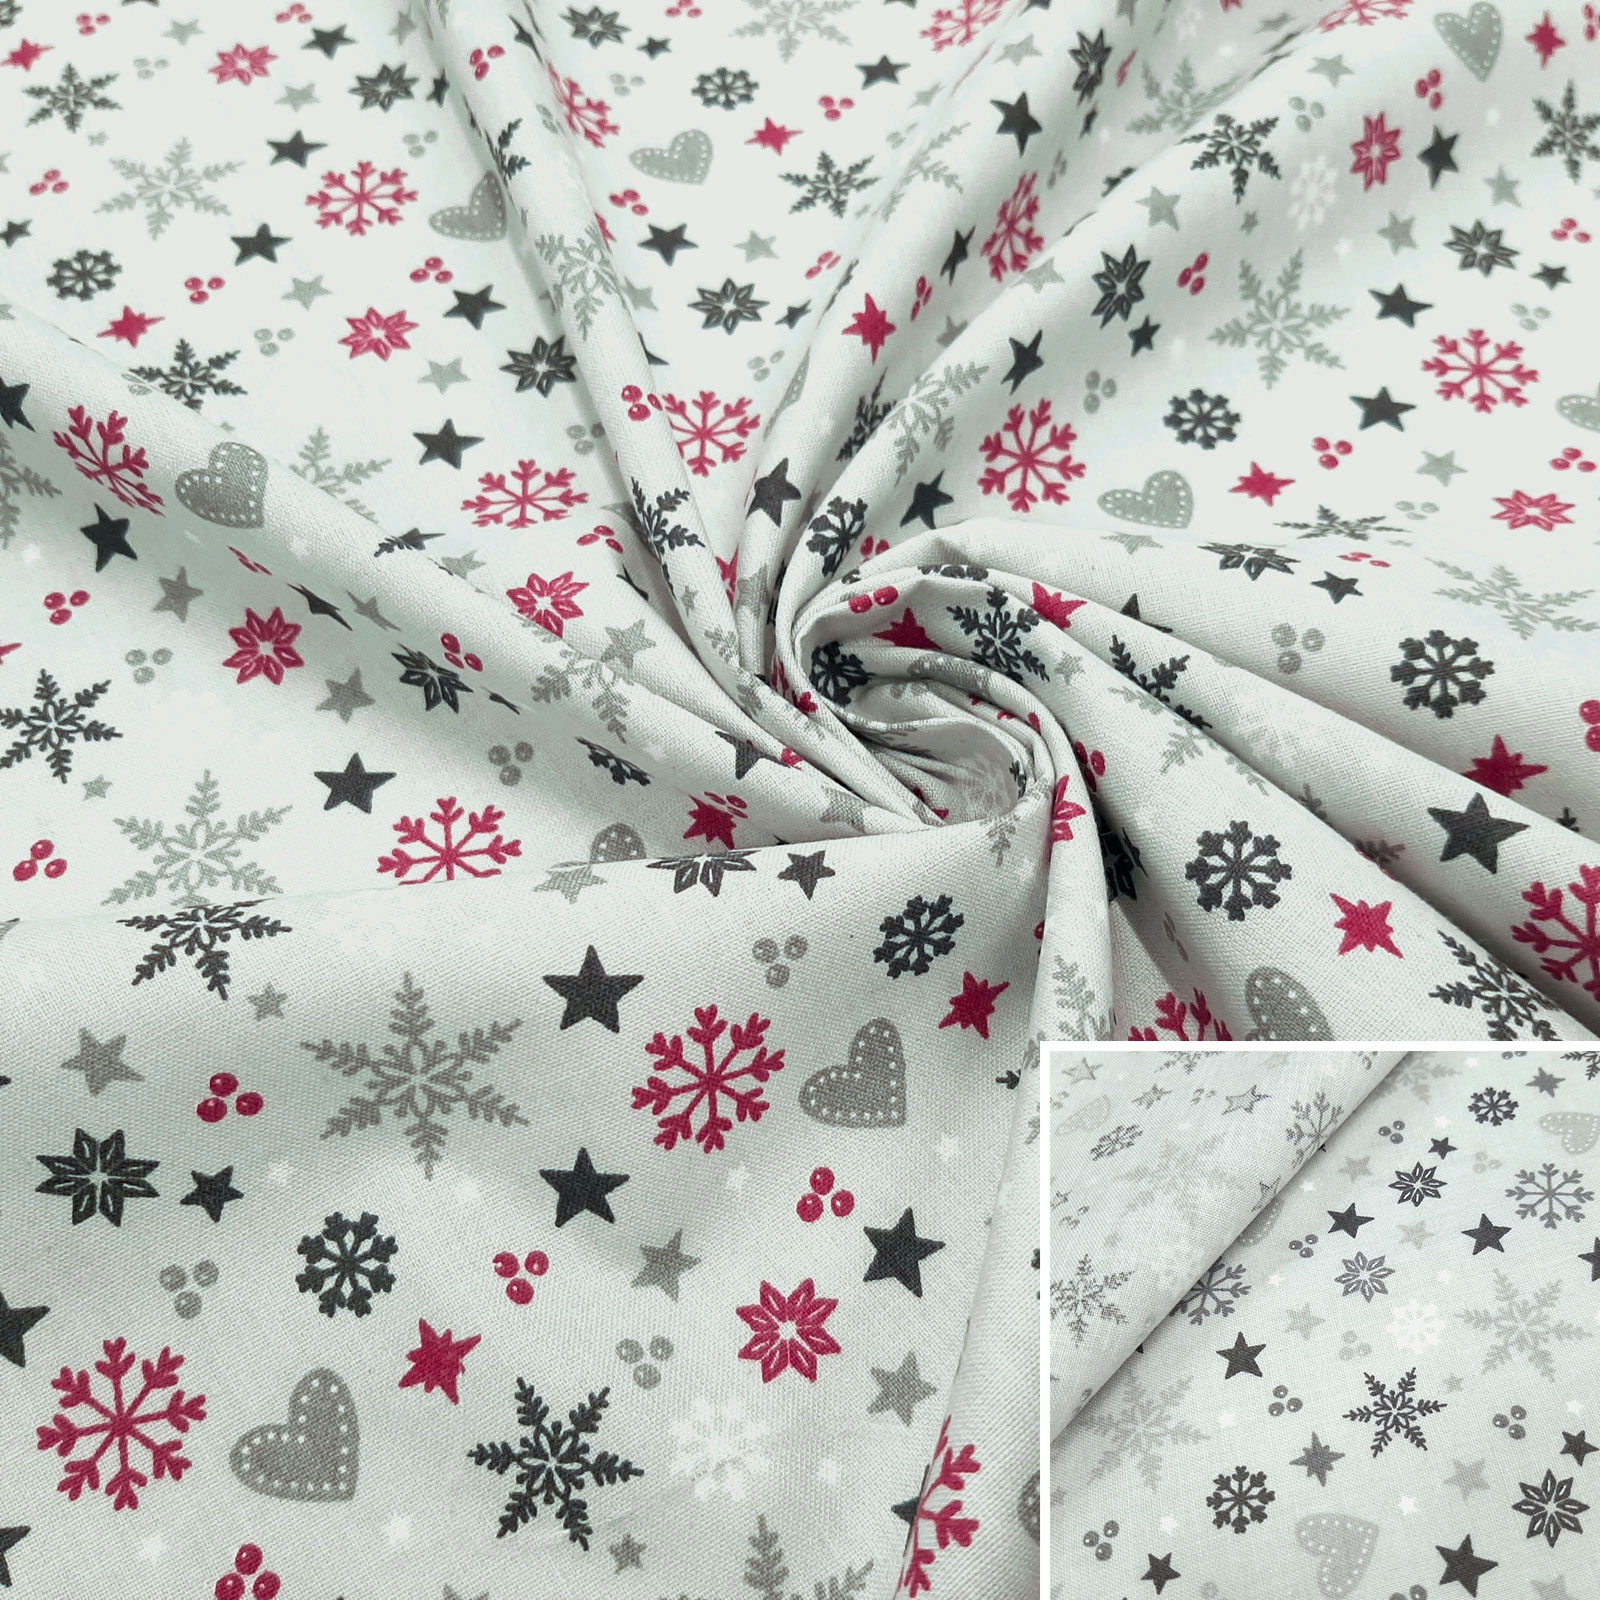 Christmas fabric "Christmas Time" - extra width 160cm